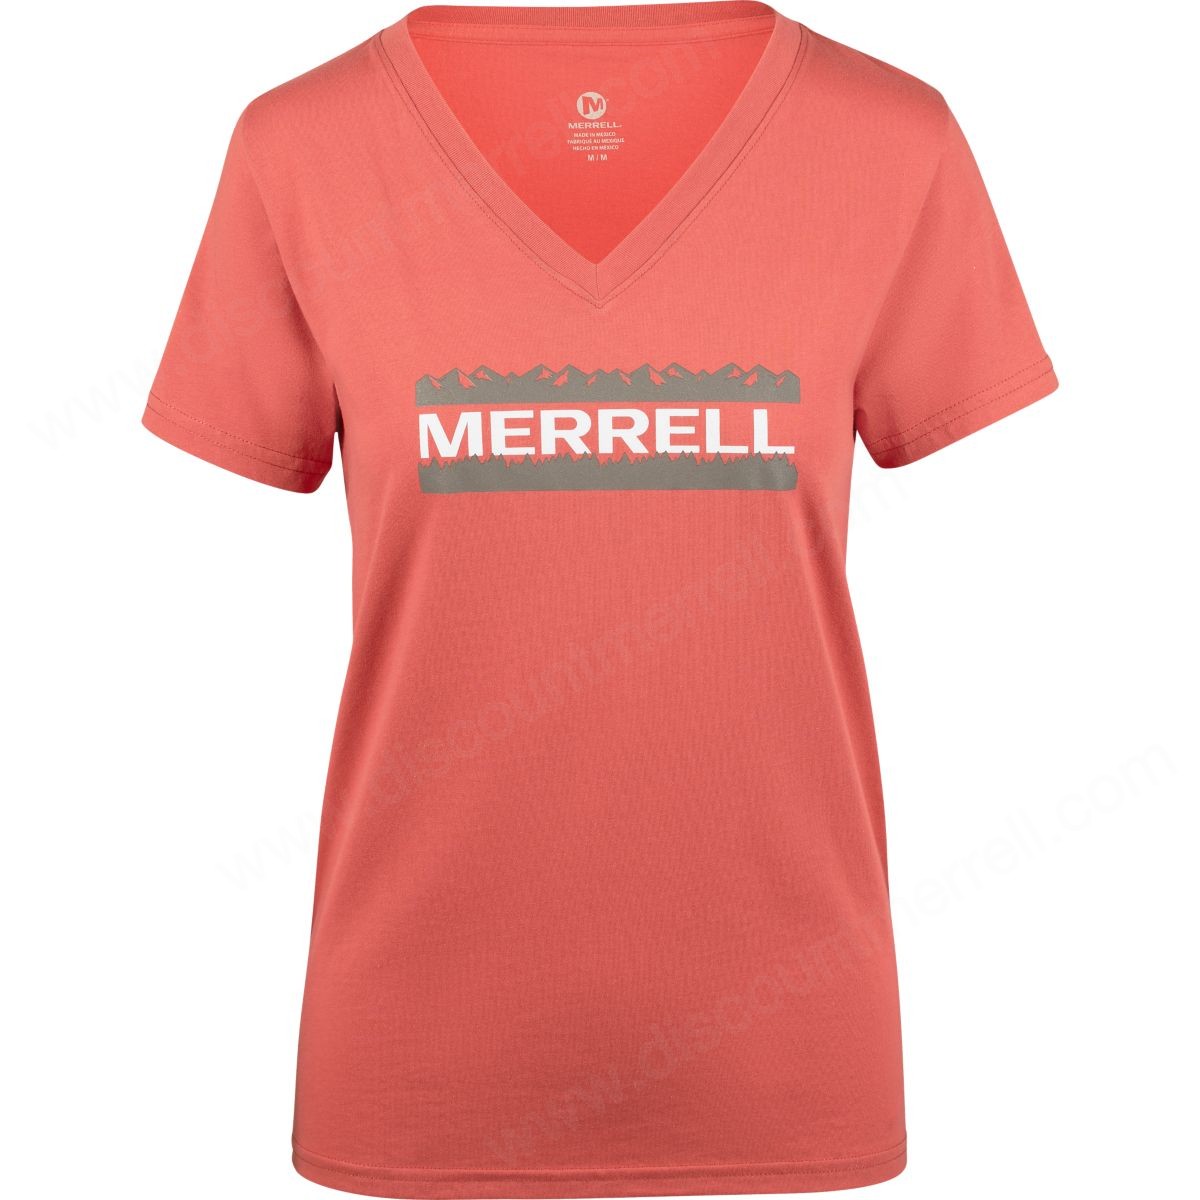 Merrell Womens's Pascal T-Shirts Apricot Brandy/boulder/white - Merrell Womens's Pascal T-Shirts Apricot Brandy/boulder/white